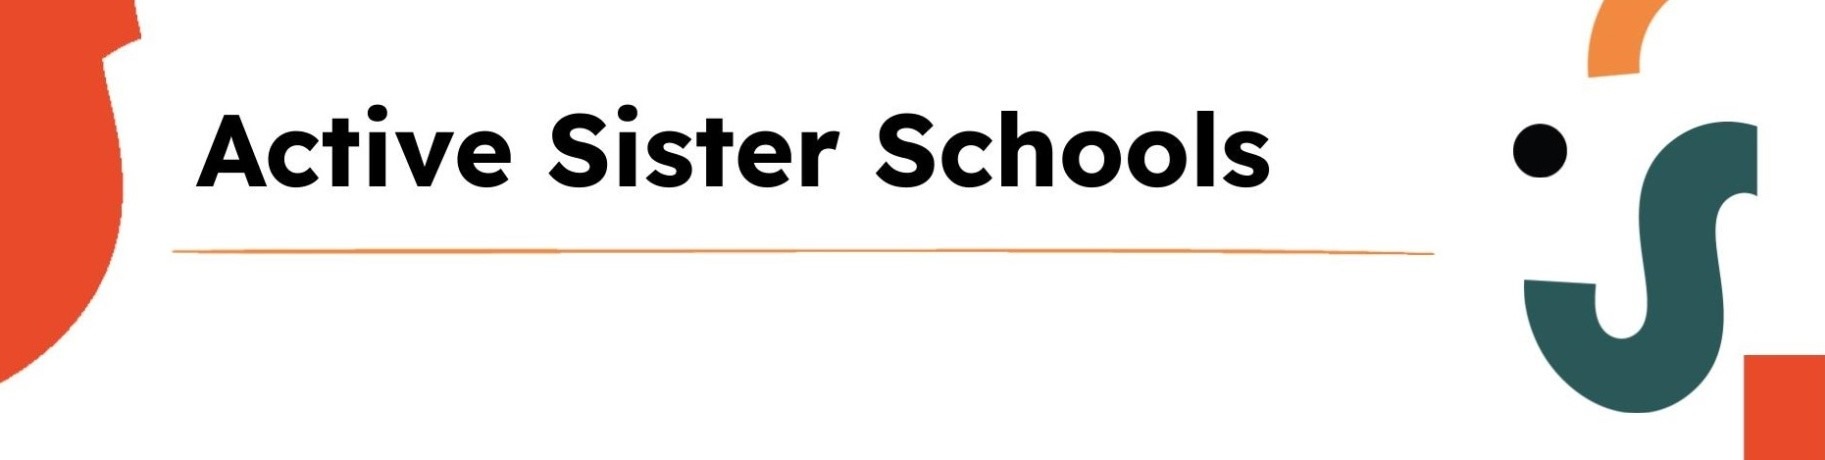 Active Sister Schools - Obrazek 1